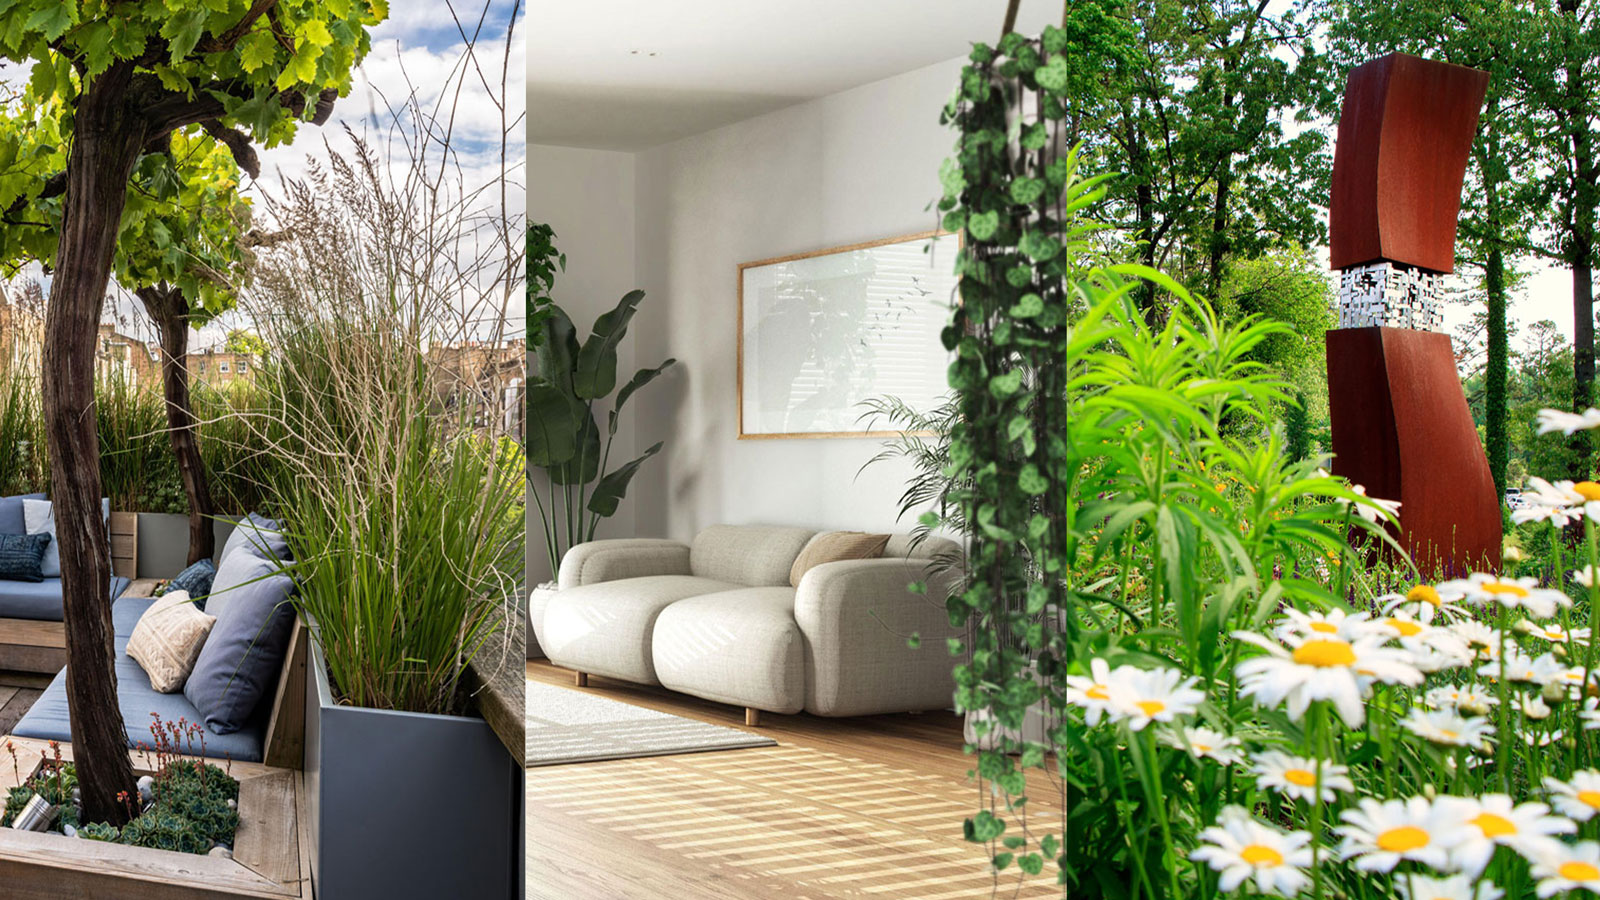 Biophilic garden design trends: experts share their ideas